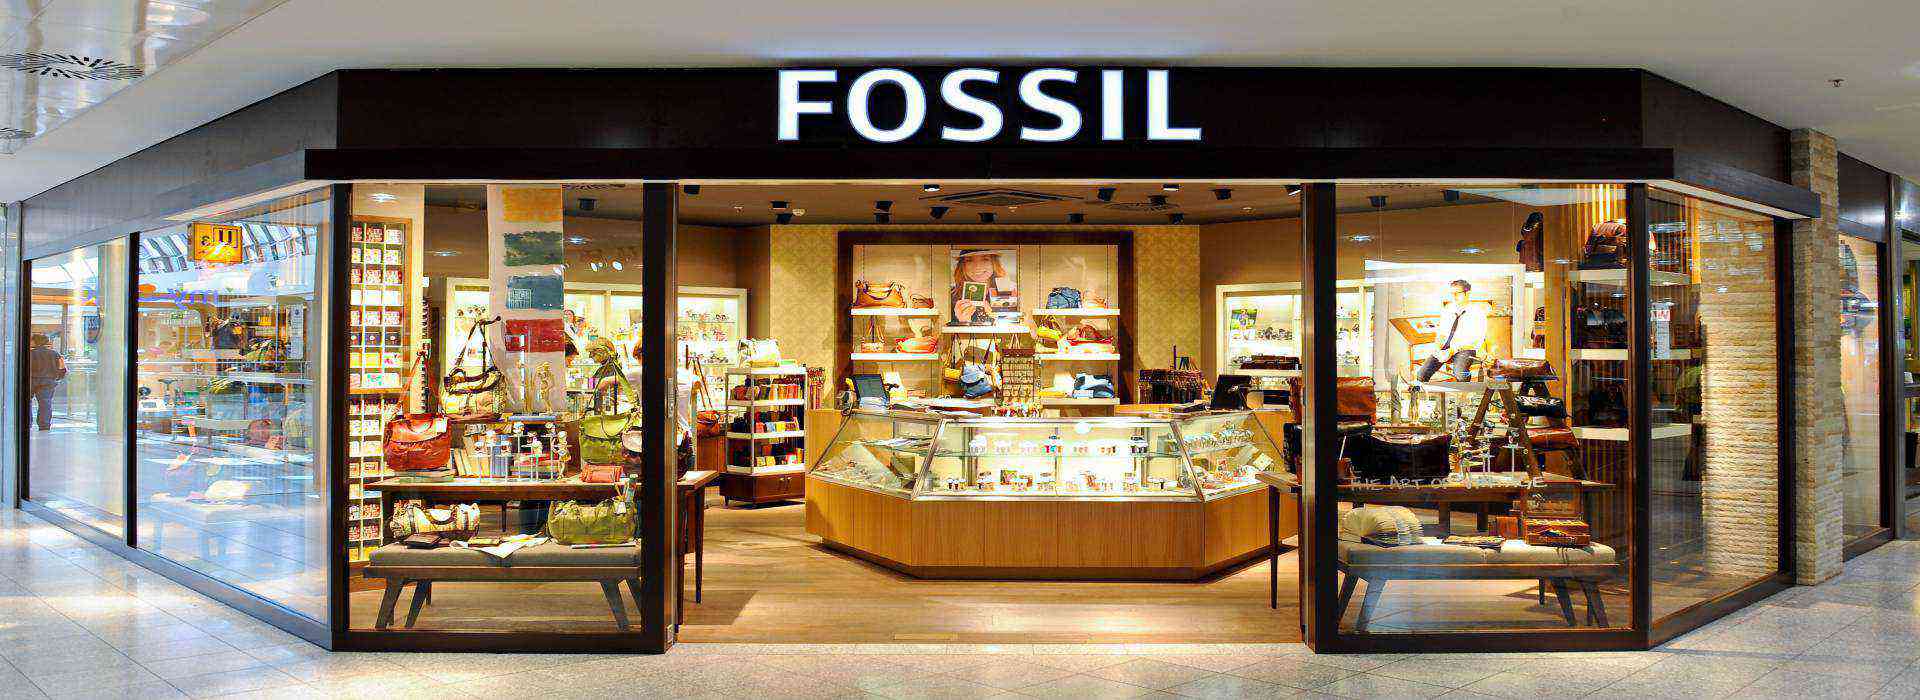 Fossil Malaysia Service Centre - malaykufa